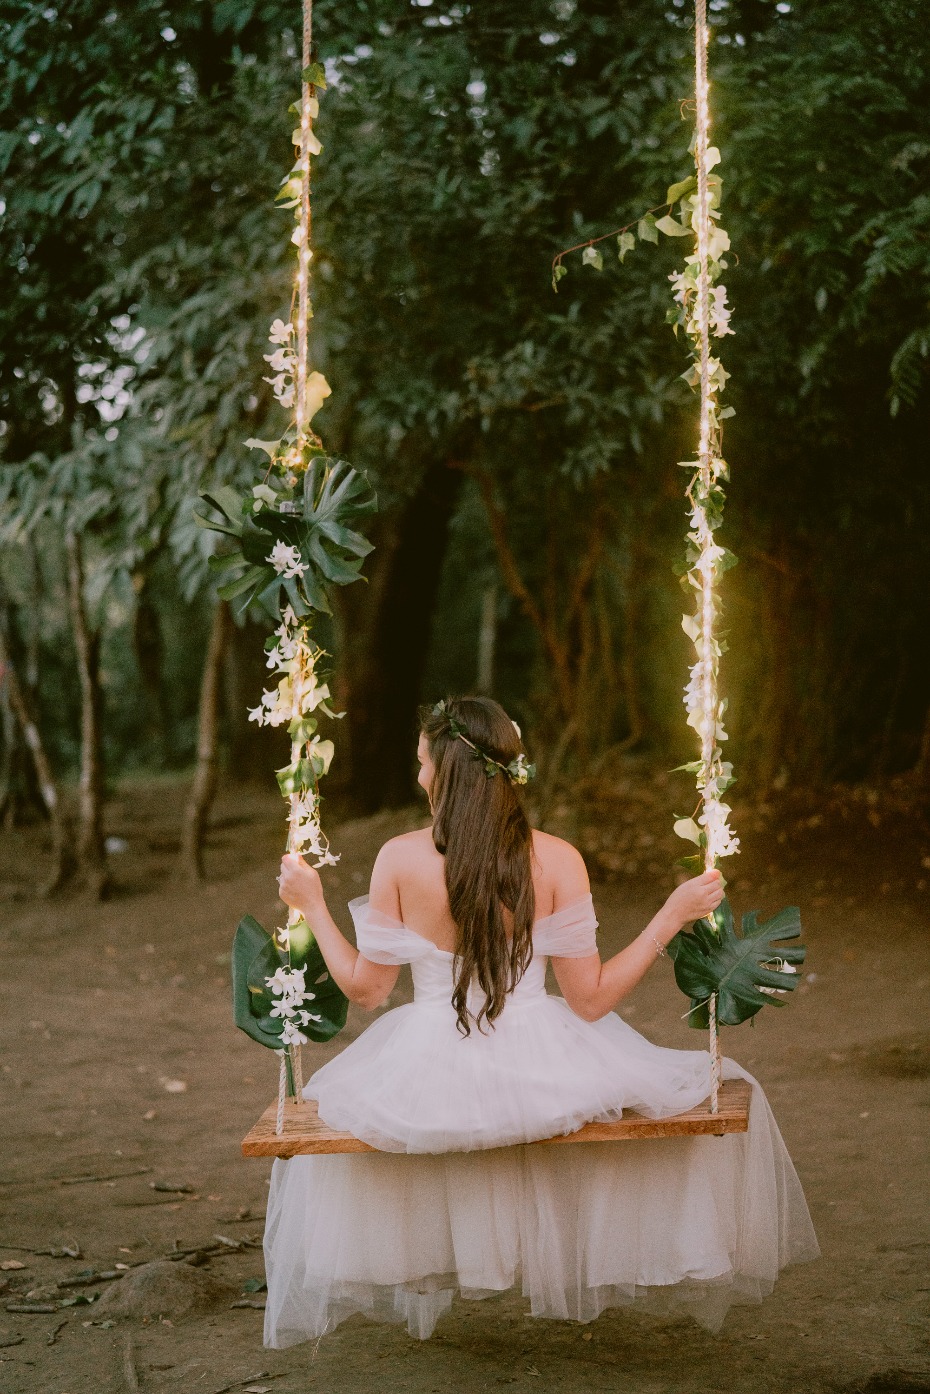 bride on lit up swing